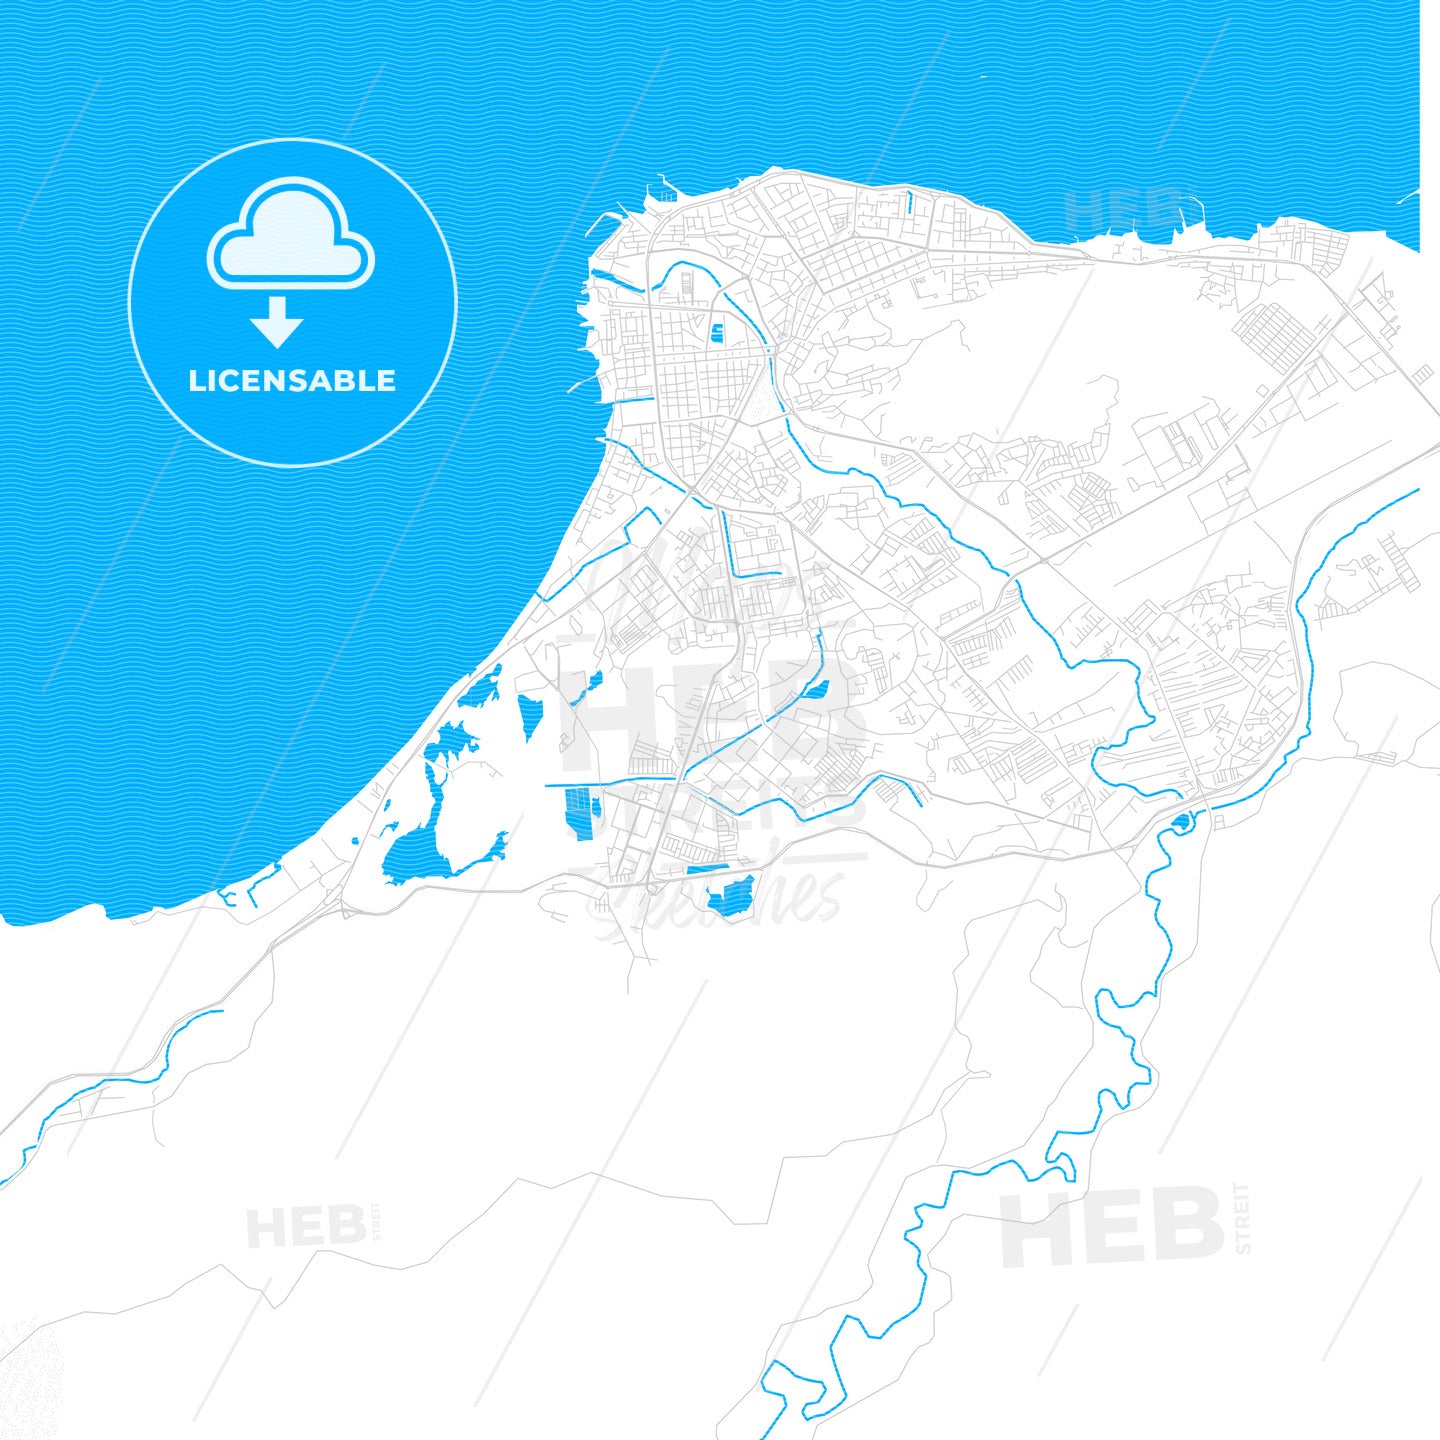 Cumana, Venezuela PDF vector map with water in focus